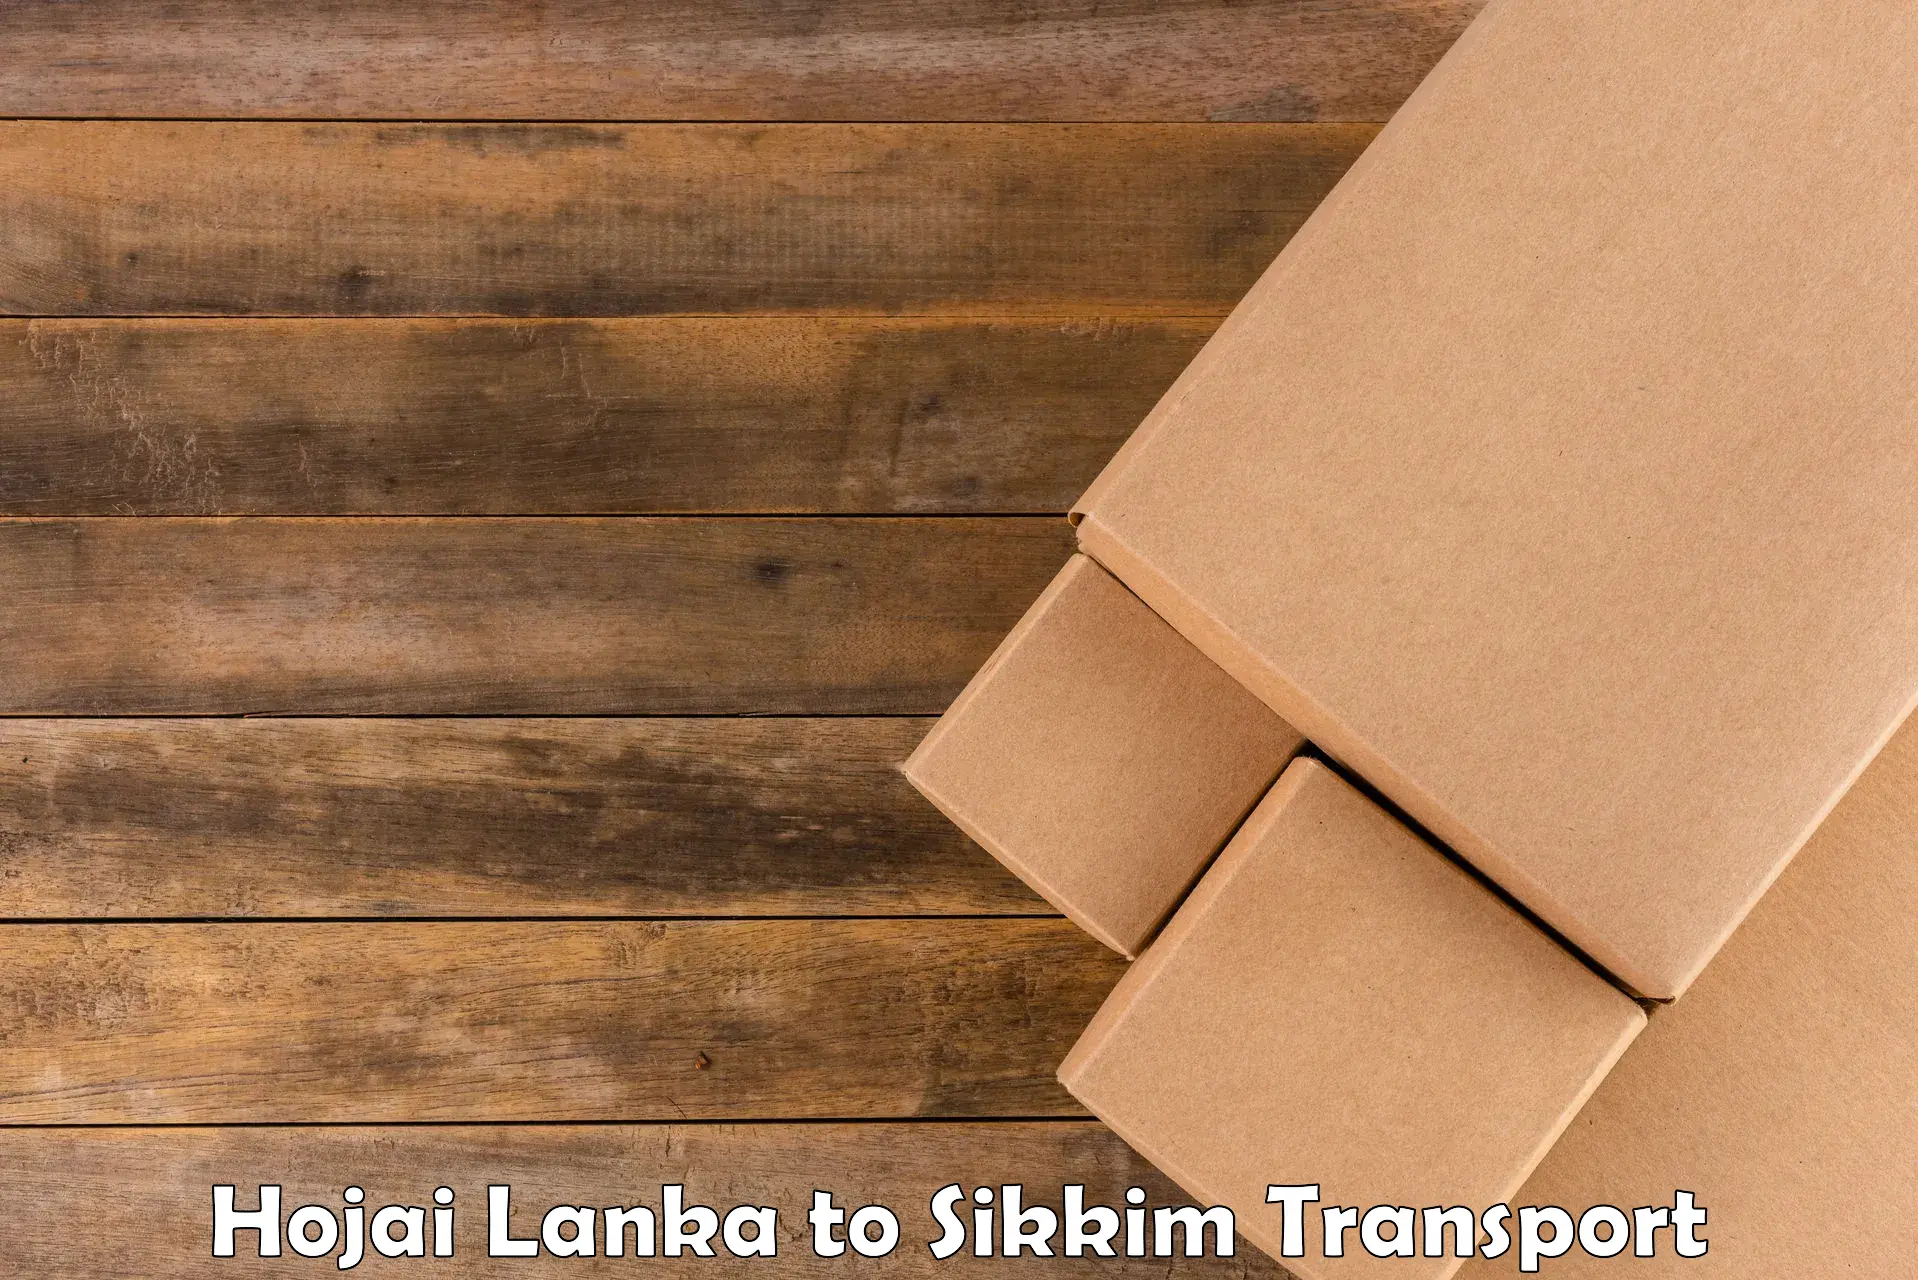 Cargo train transport services Hojai Lanka to West Sikkim